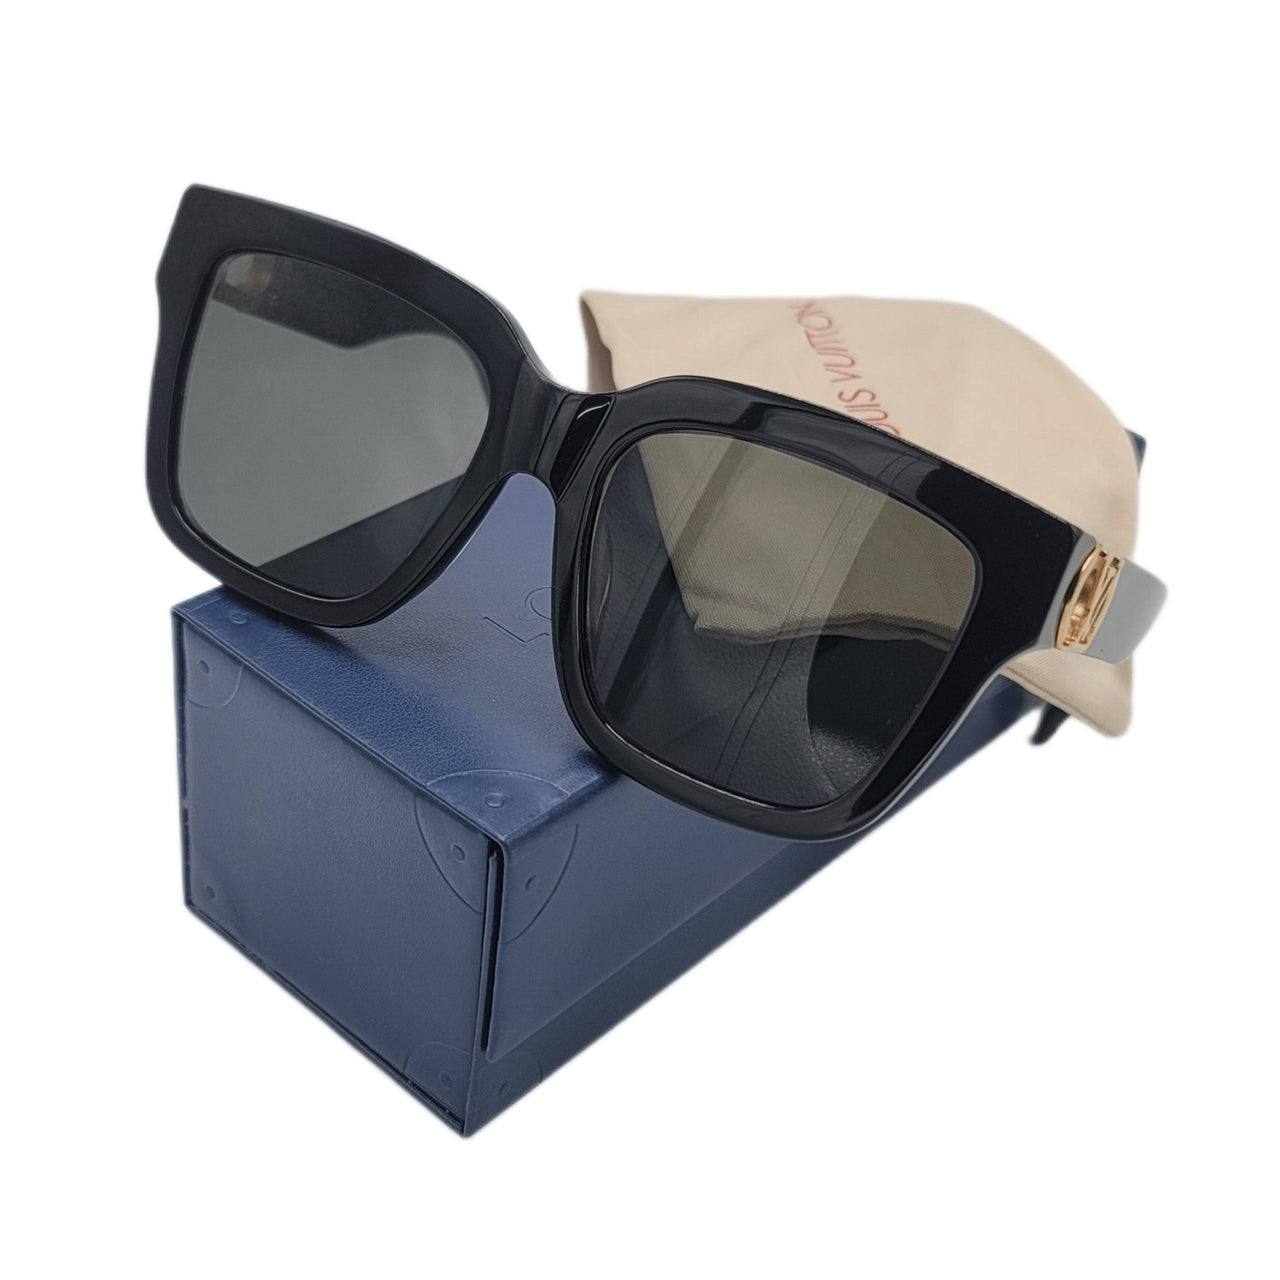 The Bag Couture Sunglasses LV Sunglasses 2